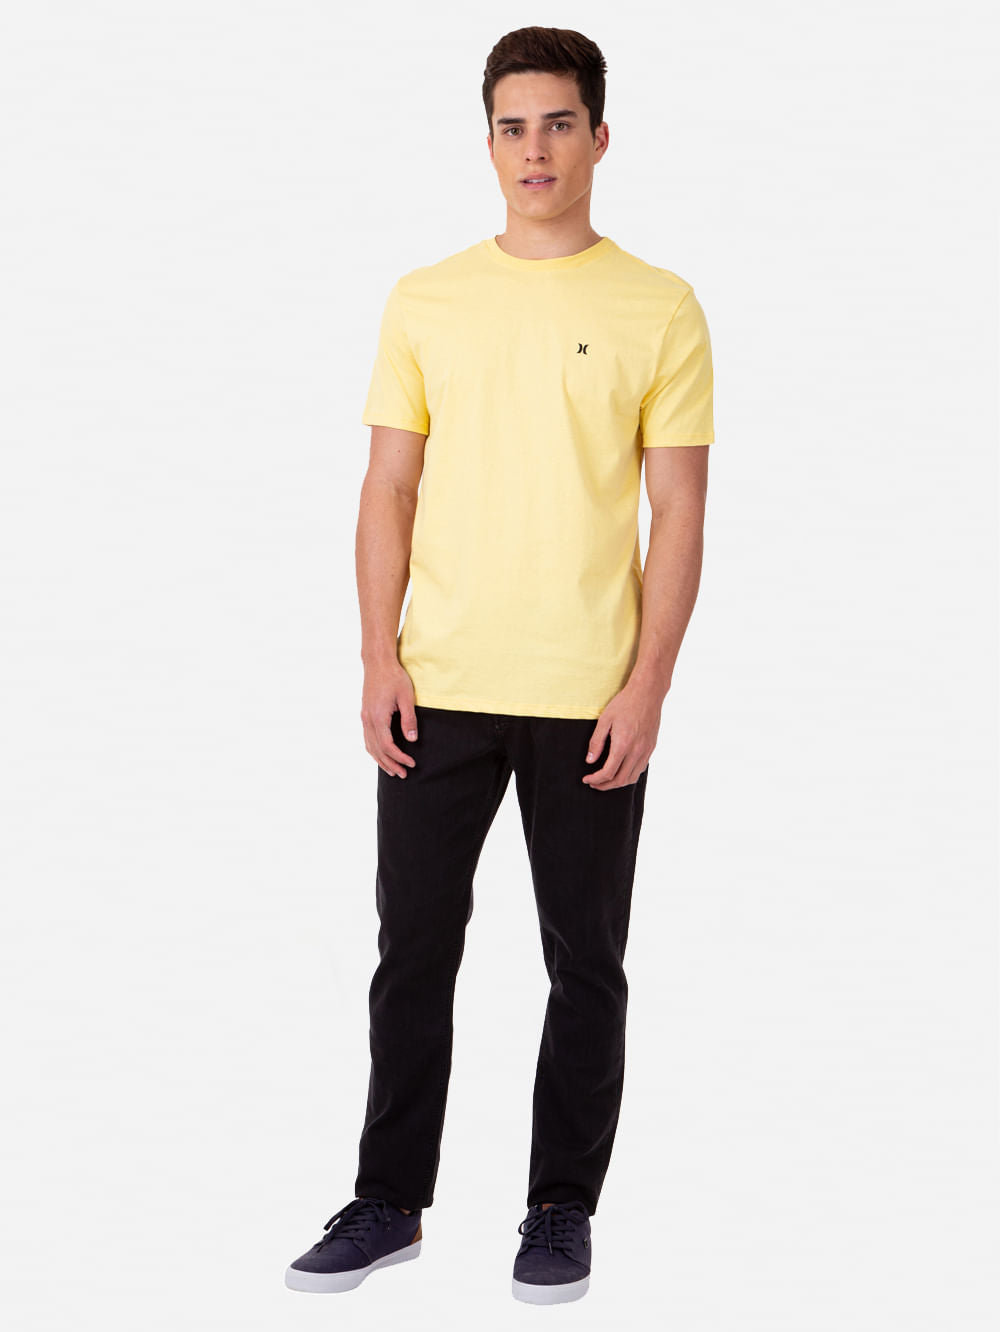 Camiseta Hurley Mini Icon Amarelo